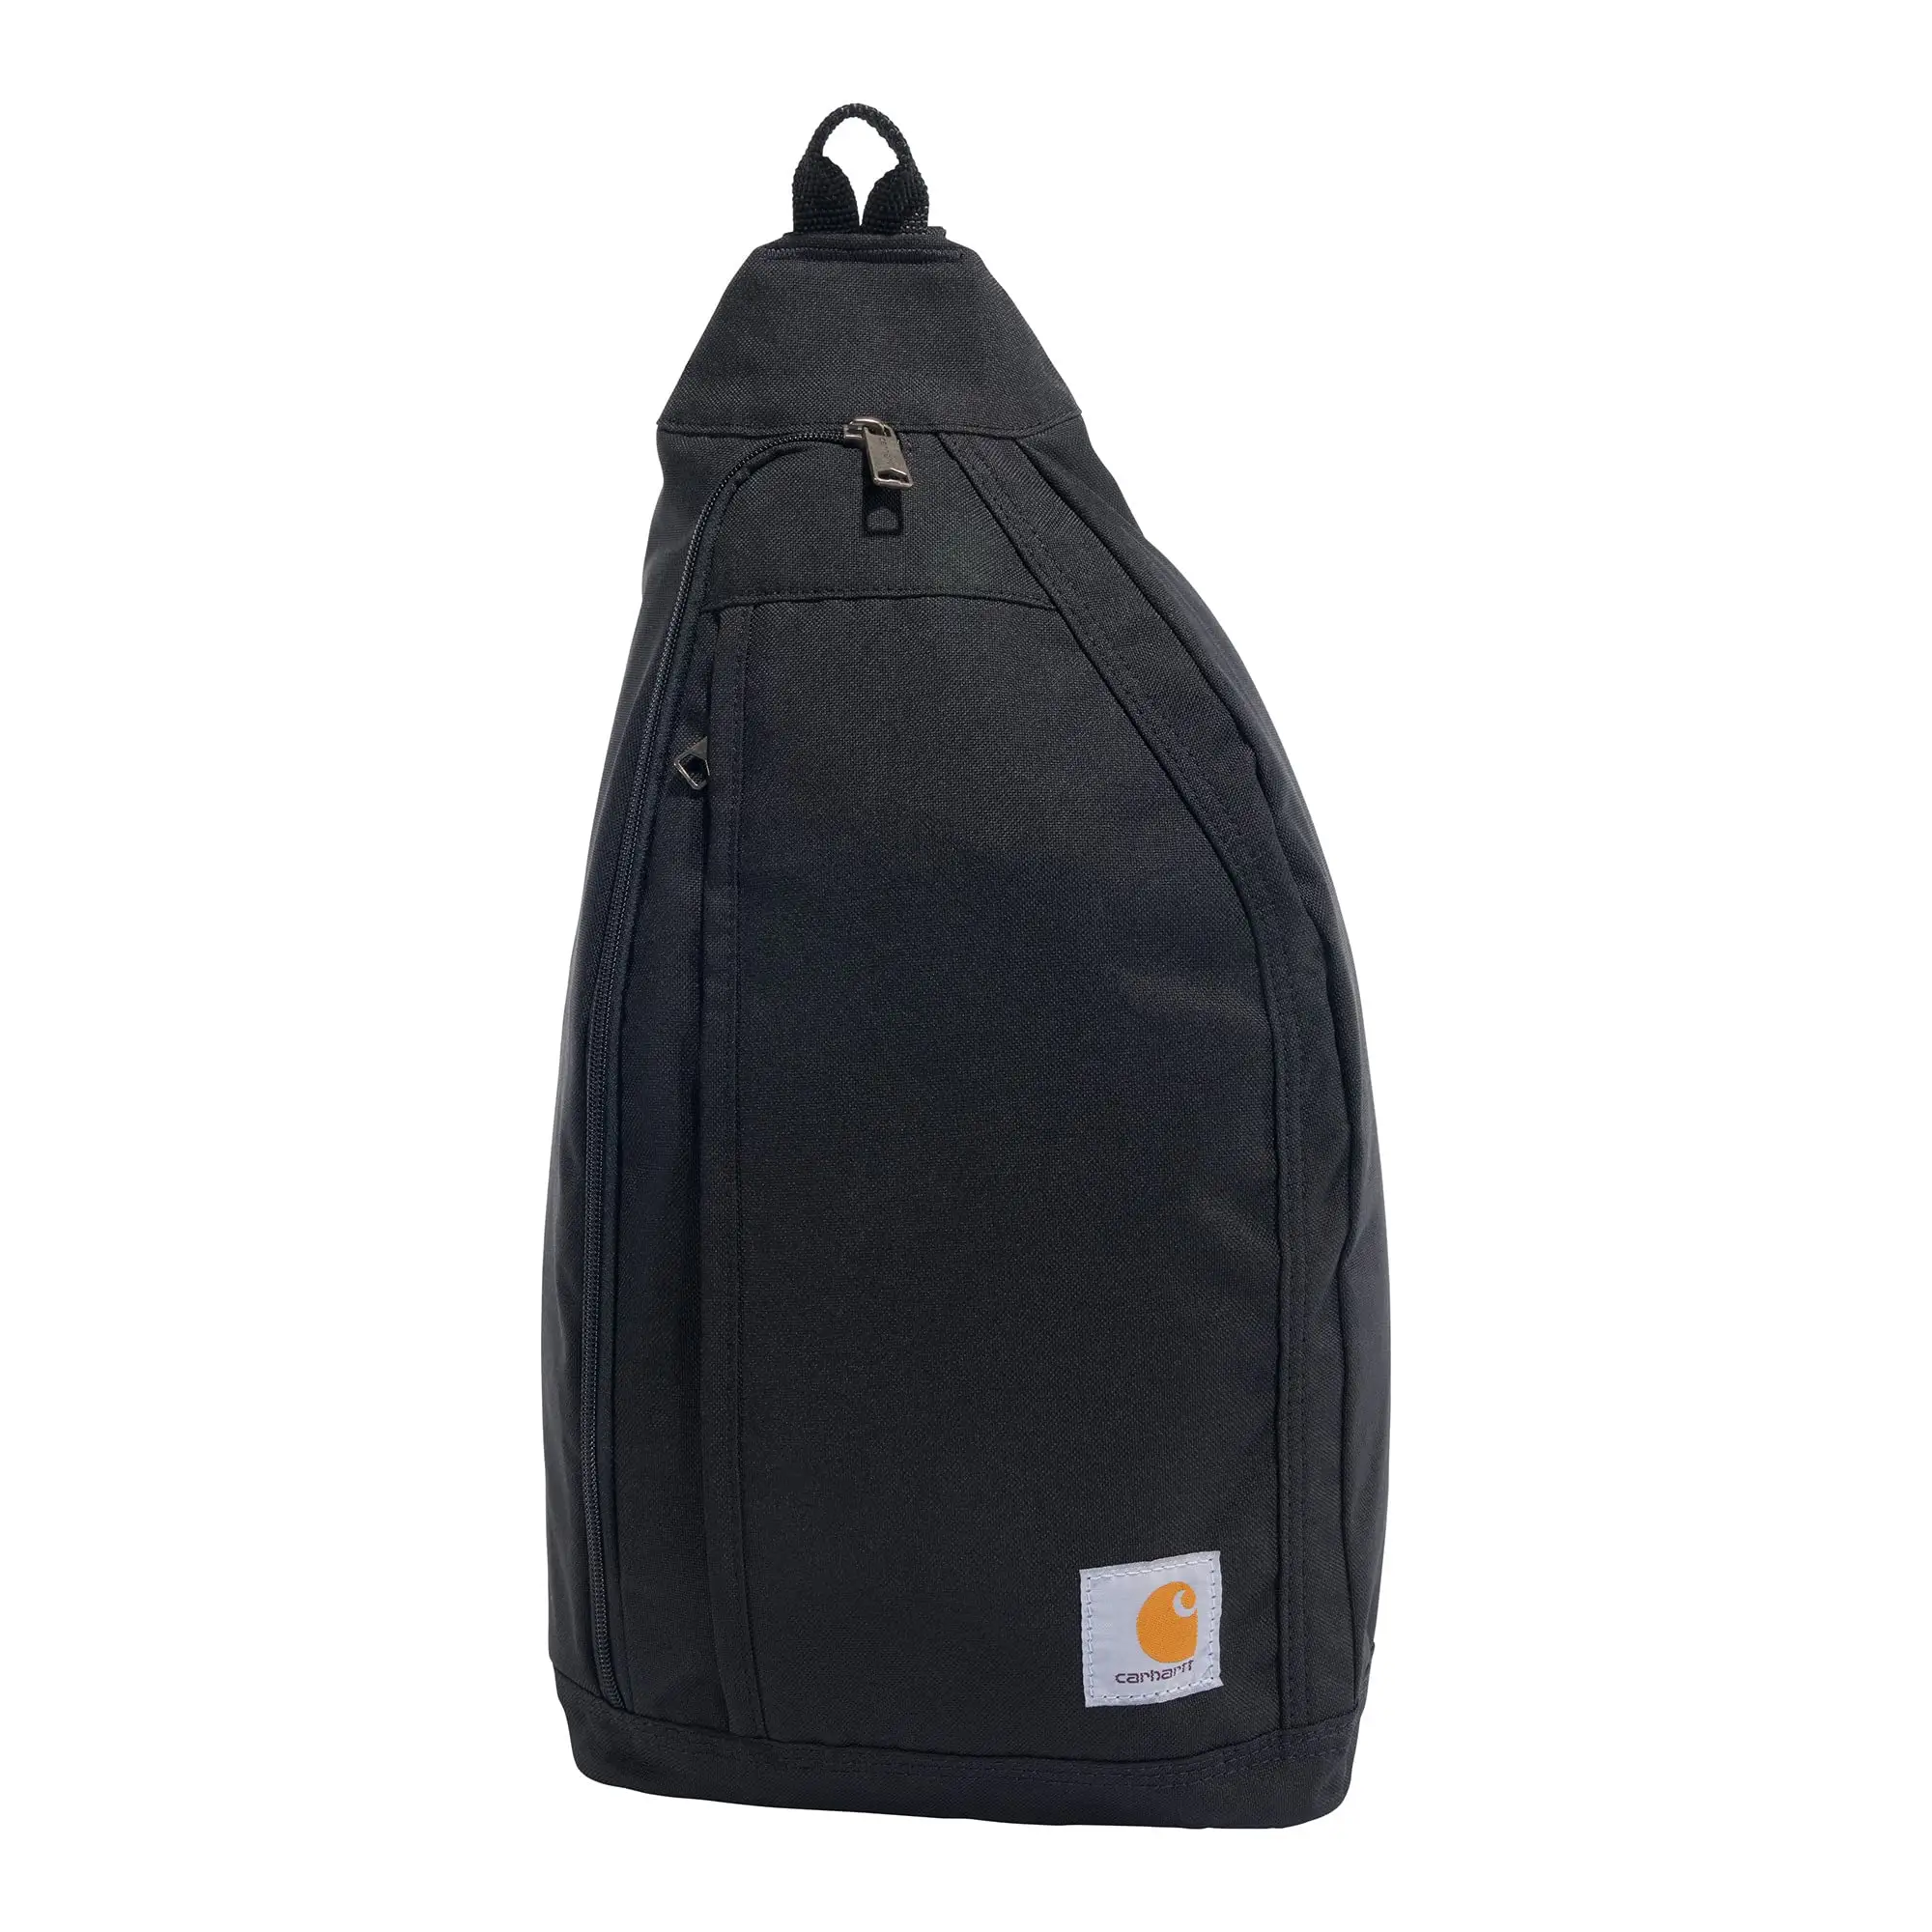 Crossbody Bag for Travel and Hiking mens bag messenger bag for men sling backpack for easy-access to essentials